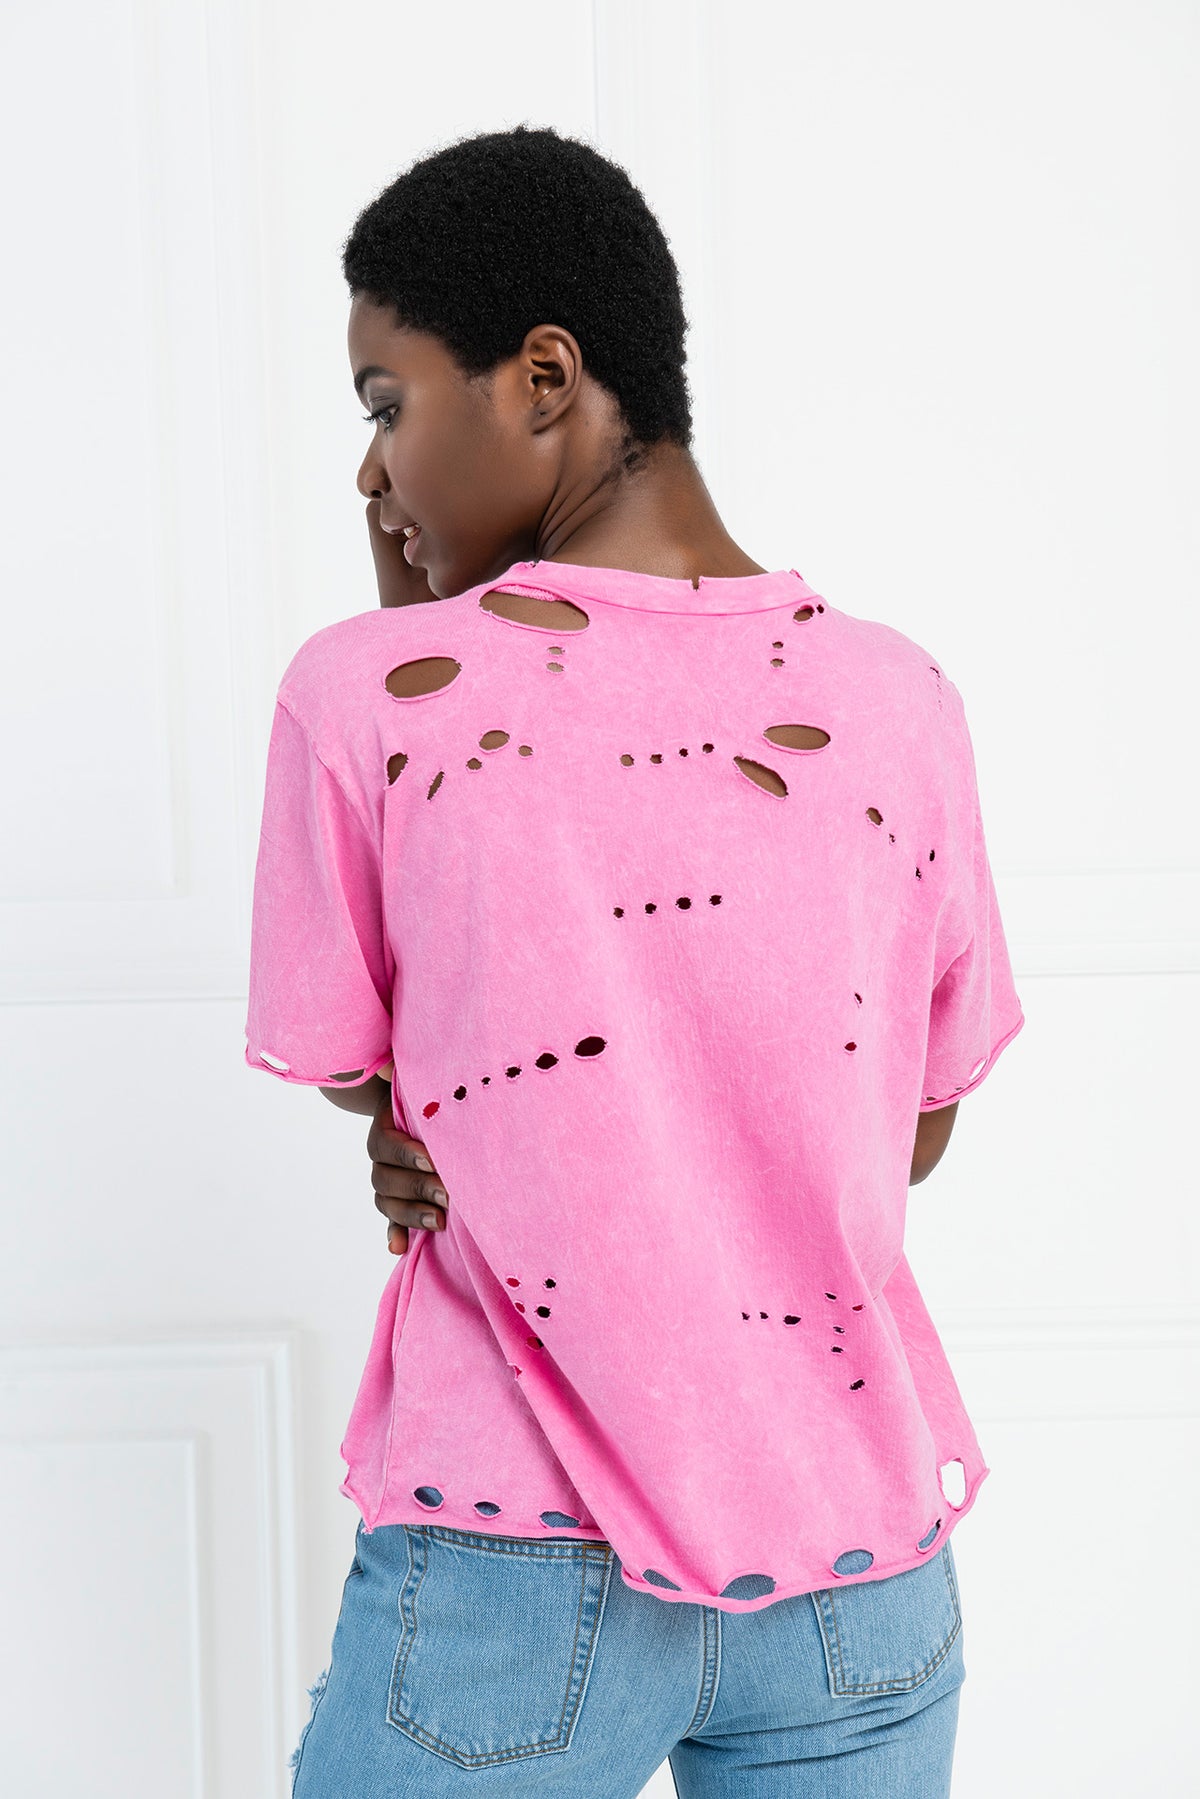 Distressed Pastel Acid Wash Boyfriend T-Shirt - Pink